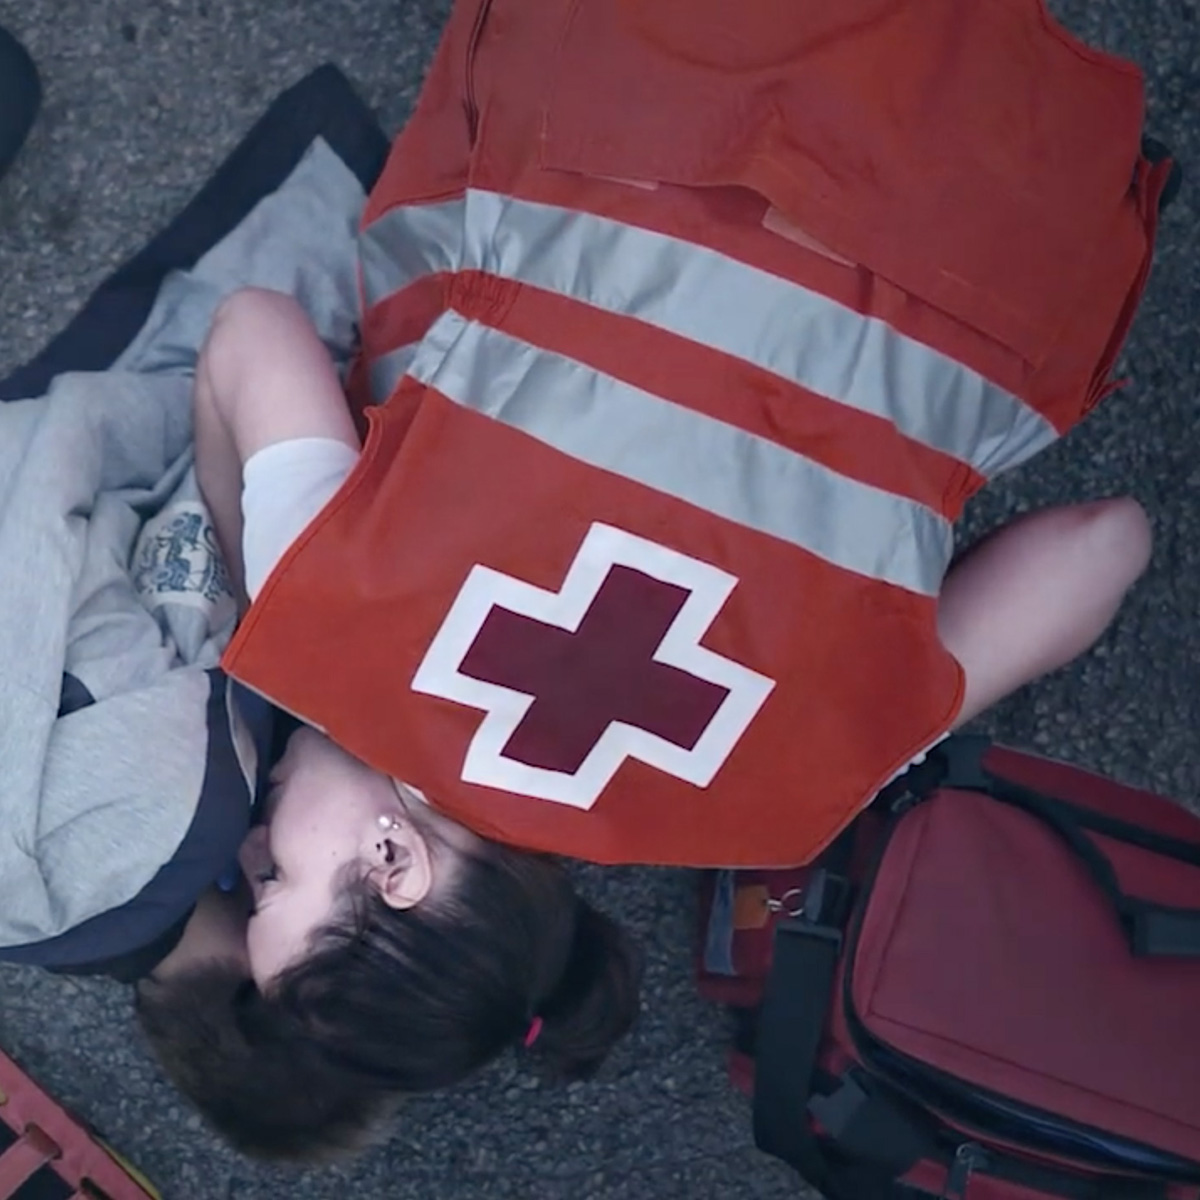 Cruz roja, cursos de primeros auxilios